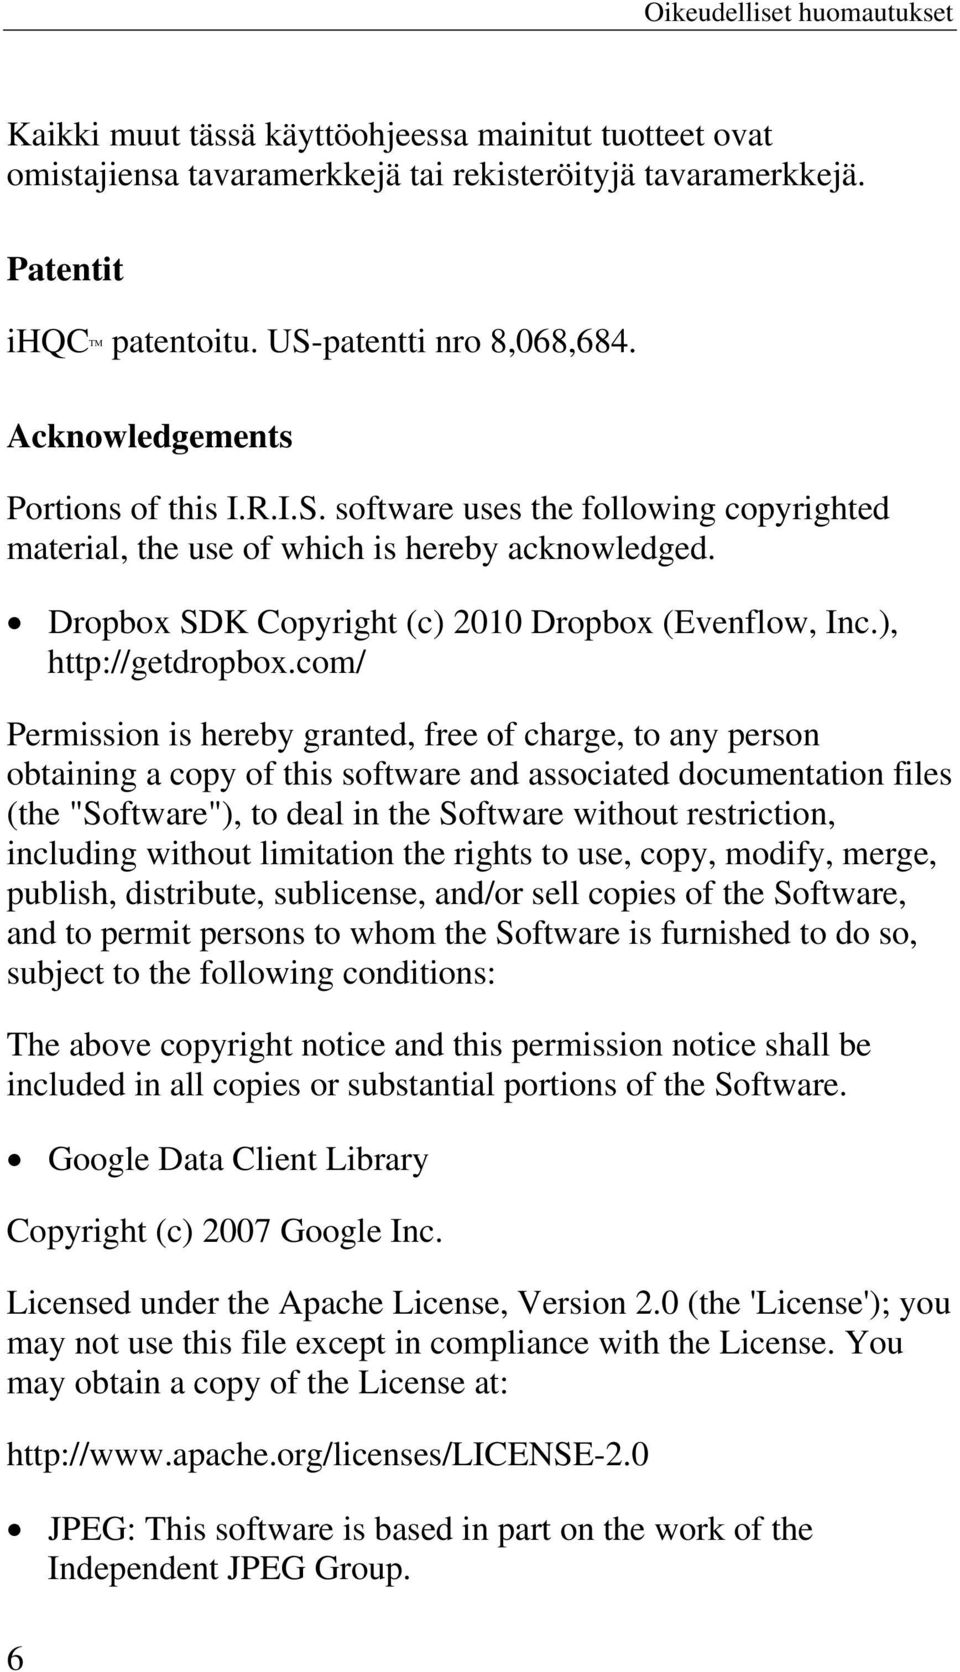 Dropbox SDK Copyright (c) 2010 Dropbox (Evenflow, Inc.), http://getdropbox.